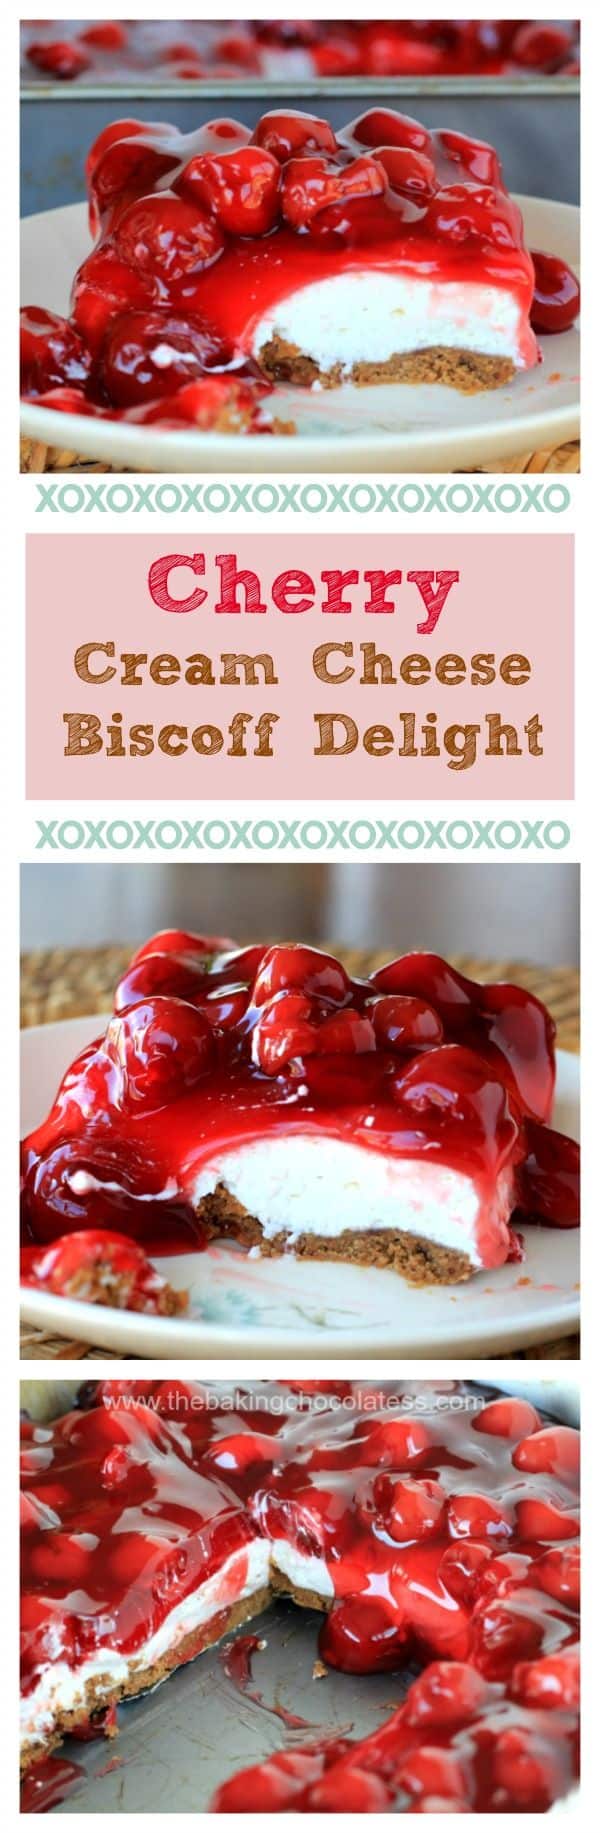 Cherry creamcheese Bisoff delight